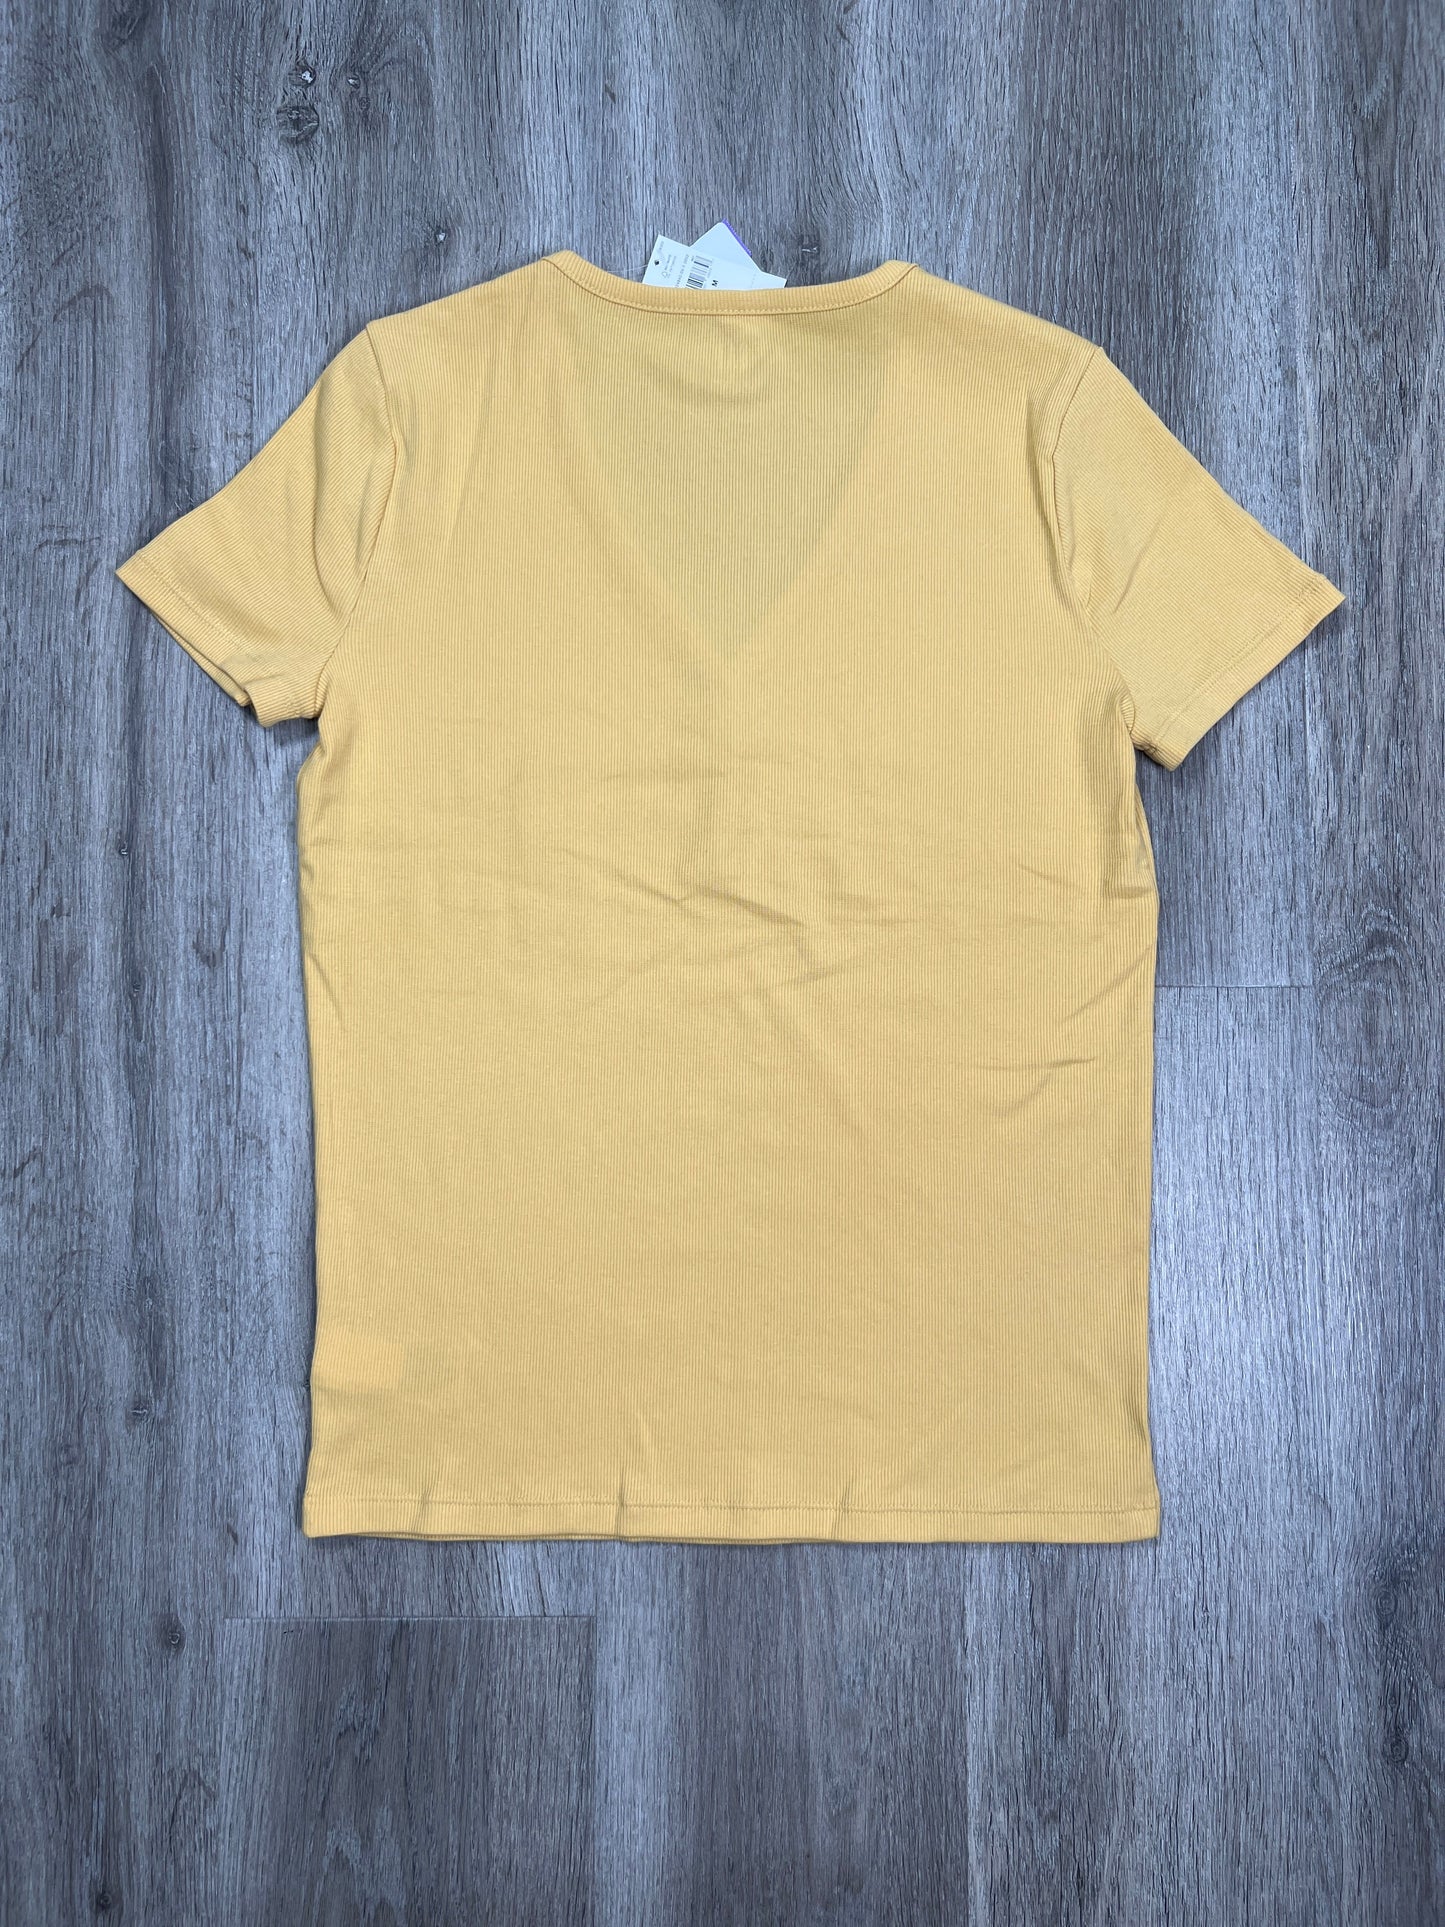 Yellow Top Short Sleeve Basic Gap, Size M